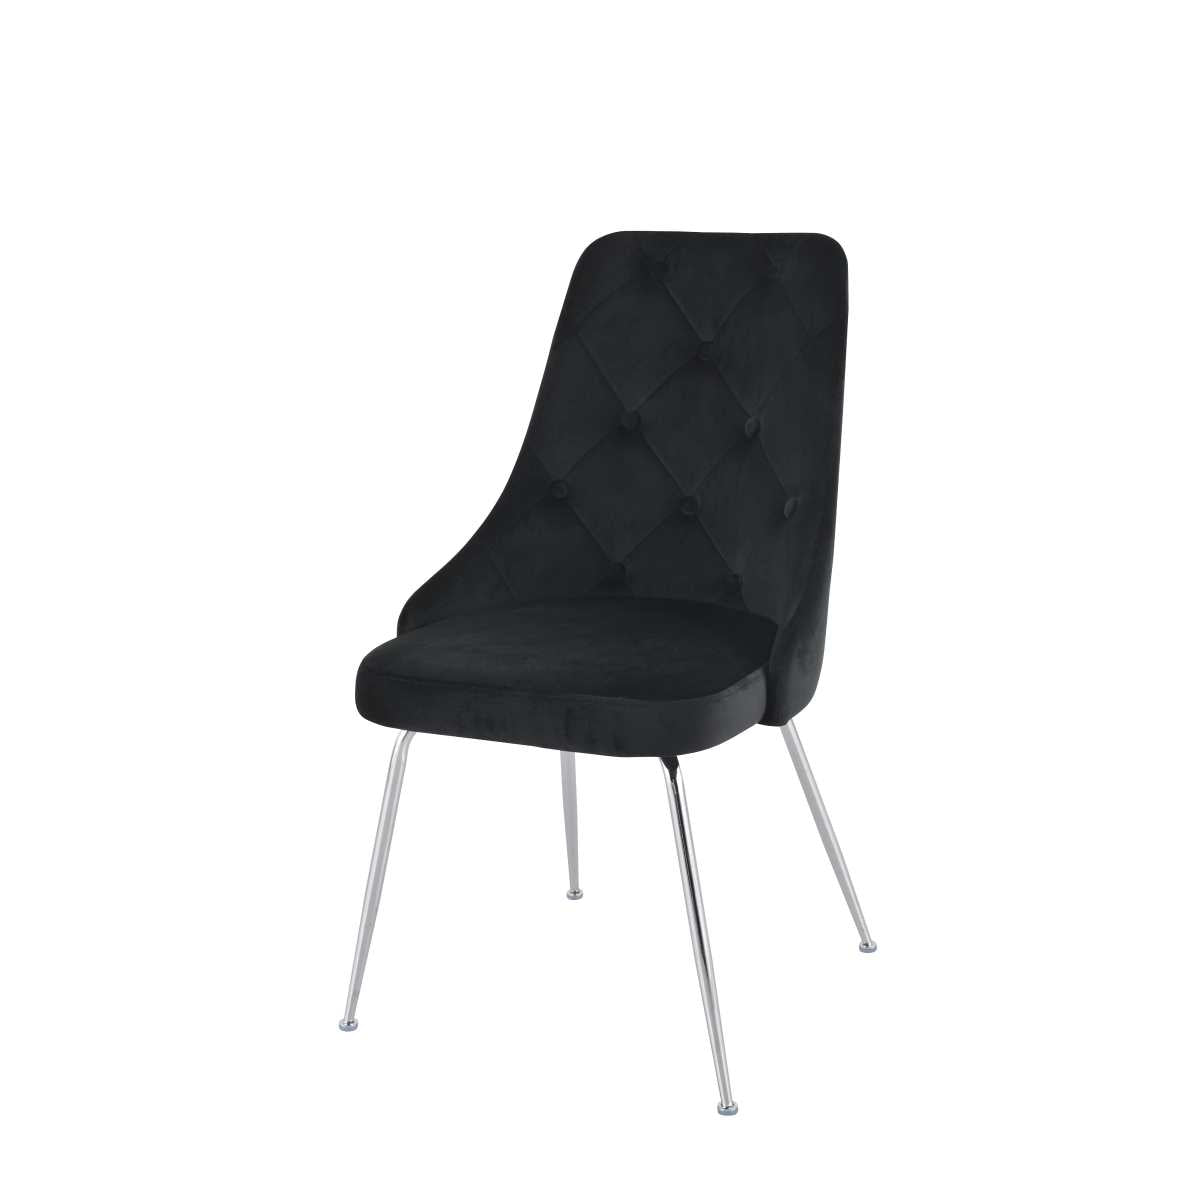 Plumeria Chairs Set Of 2 Black With Chrome Legs 1321